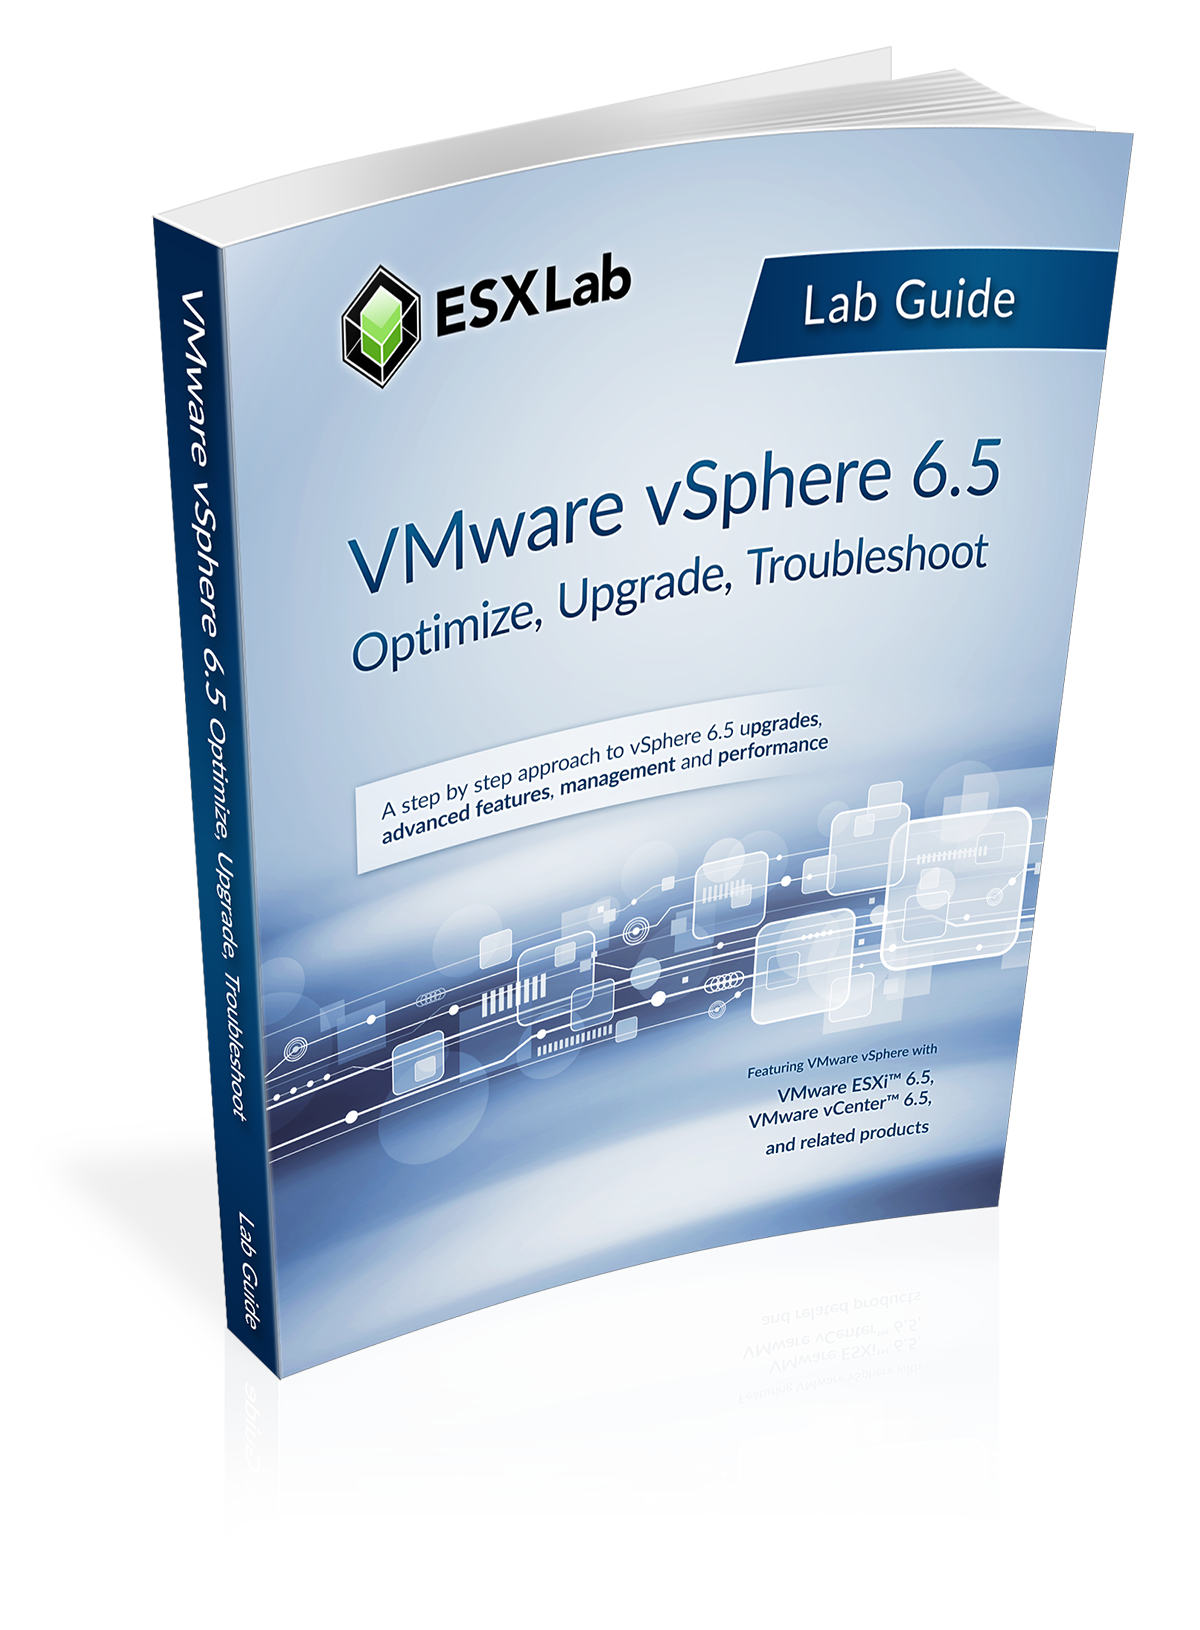 VMware vSphere 6.7 Optimize, Upgrade, Troubleshoot Lab Guide